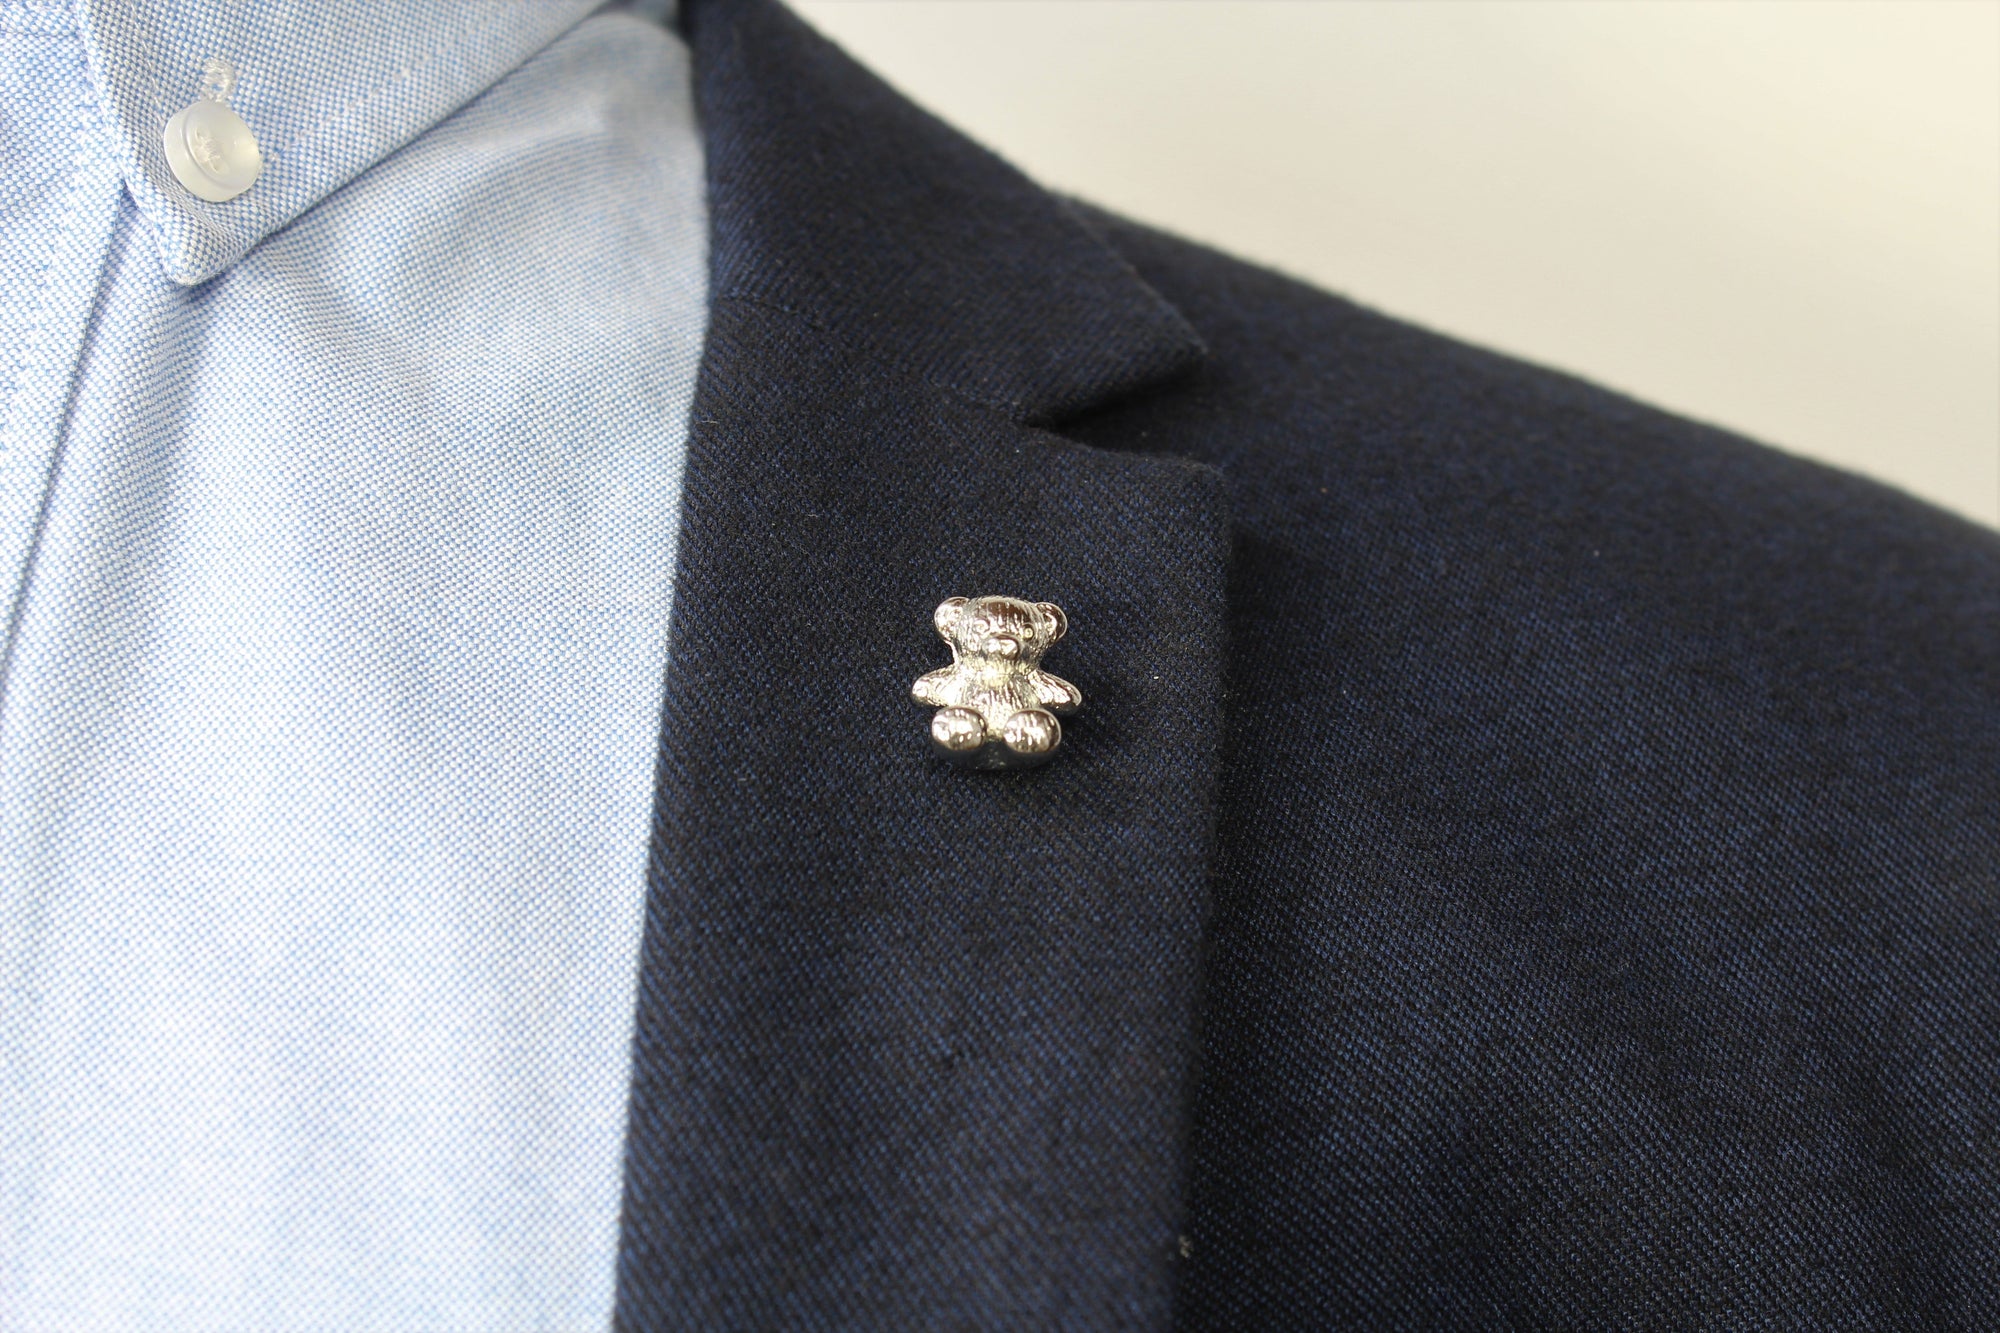 Teddy Bear Lapel Pin on blazer - Stolen Riches